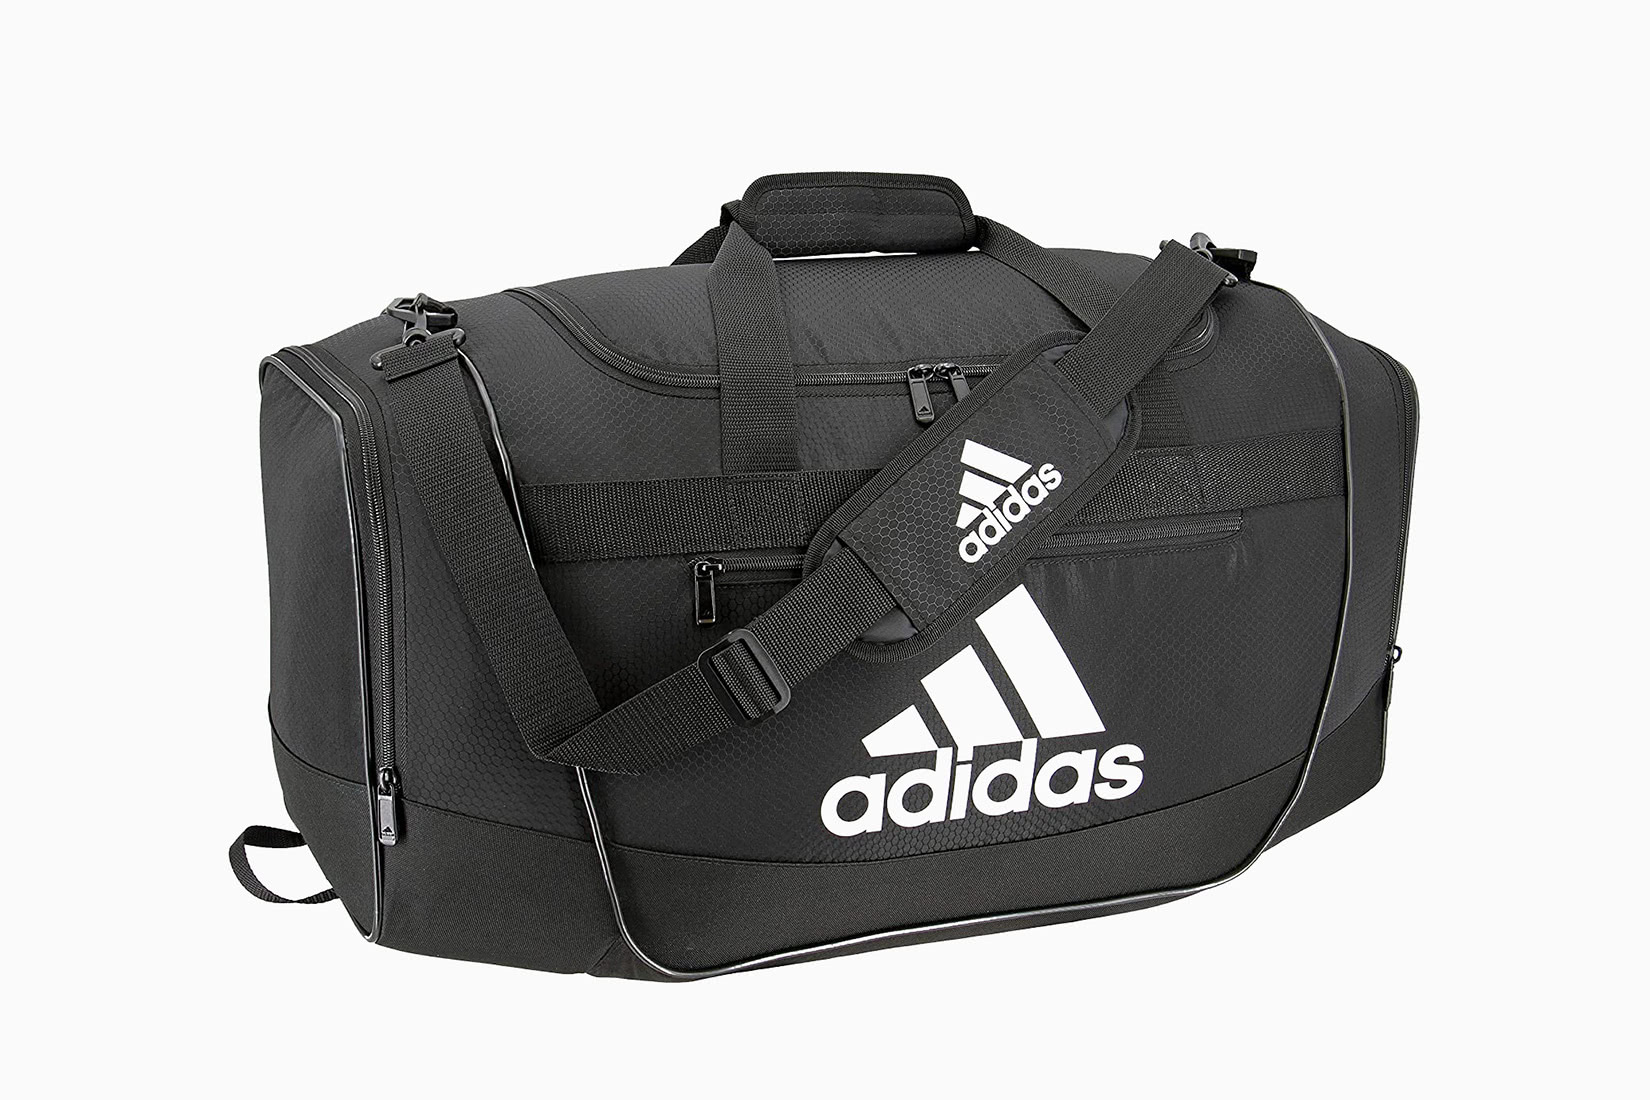 Meilleur sac de sport pour homme duffel adidas defender III - Luxe Digital